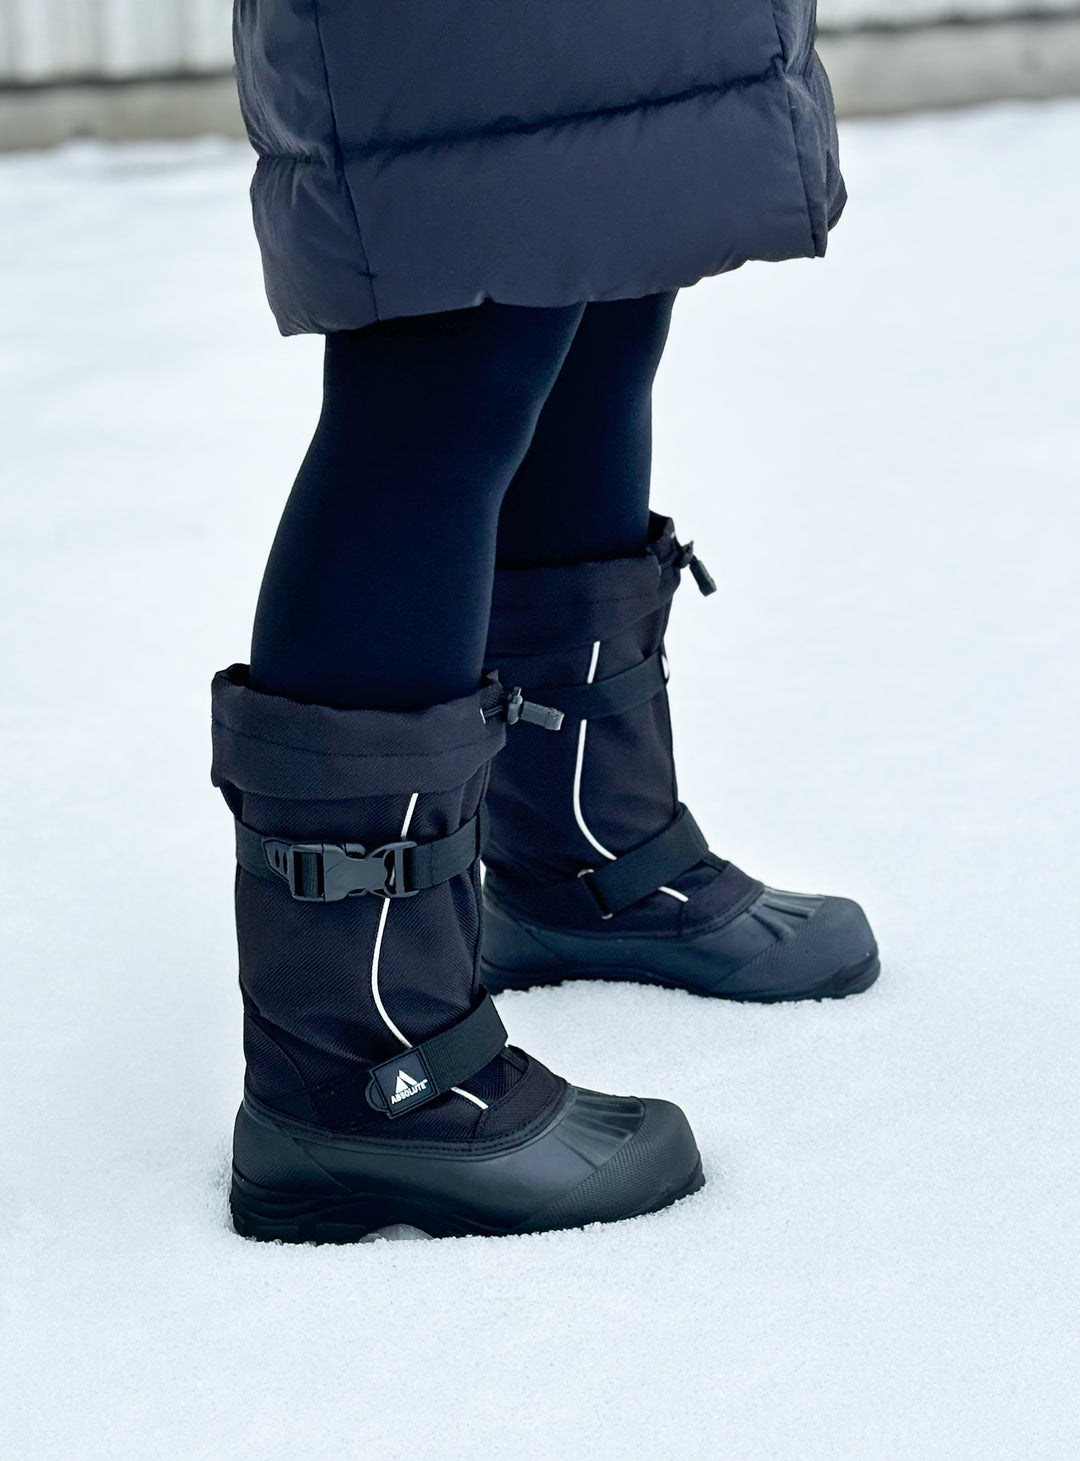 Horizon 3 Womens Black Boot in Snow